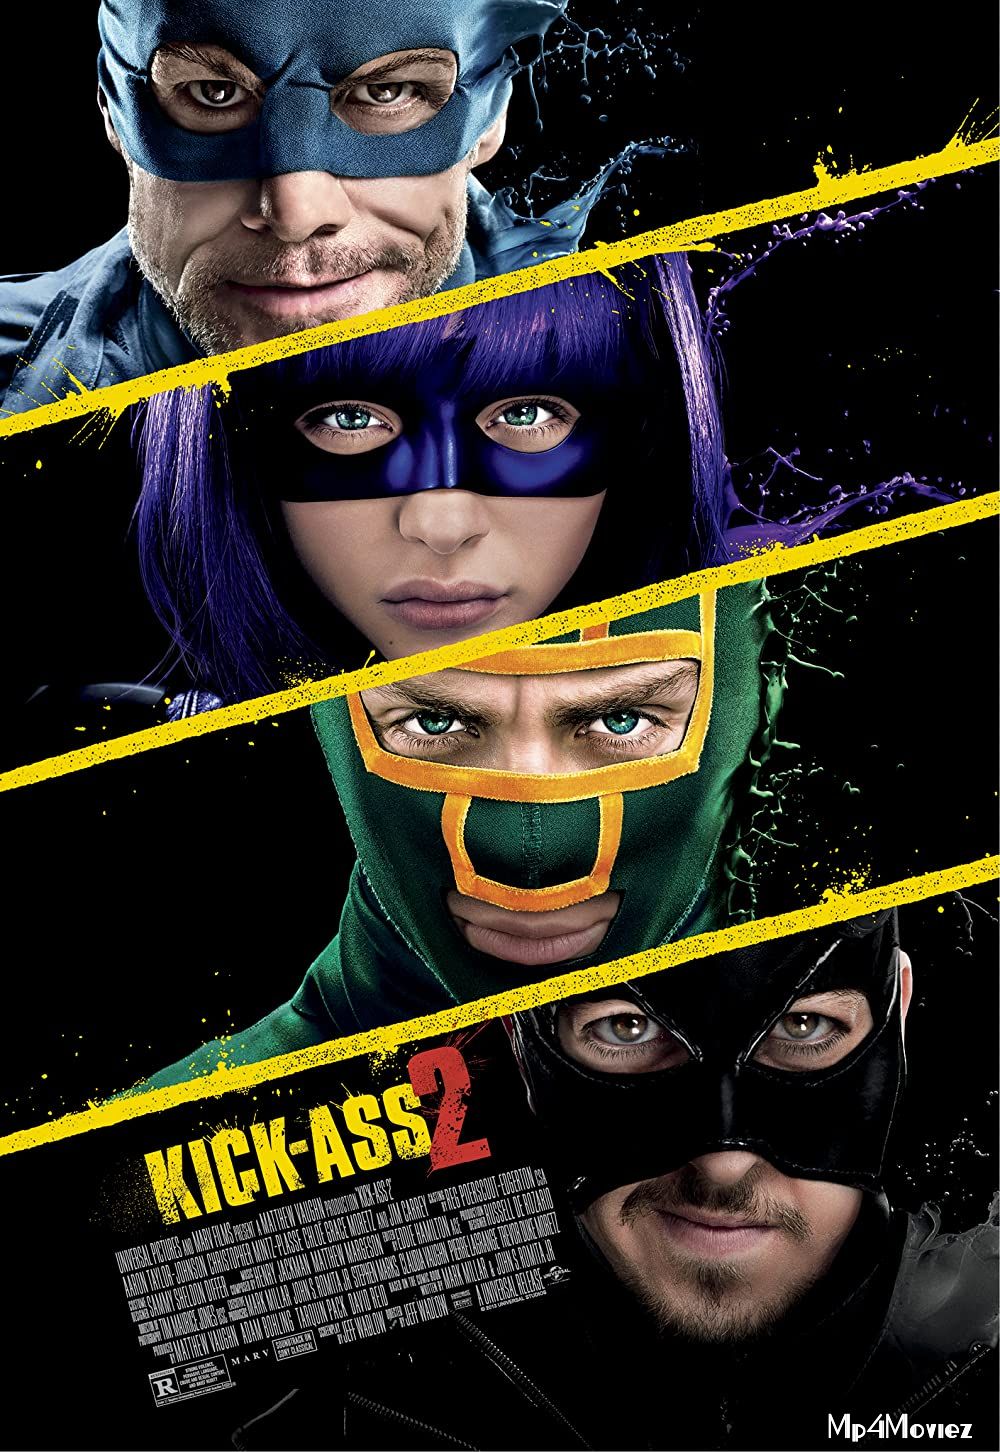 Kick-Ass 2 (2013) Hindi Dubbed ORG BluRay download full movie